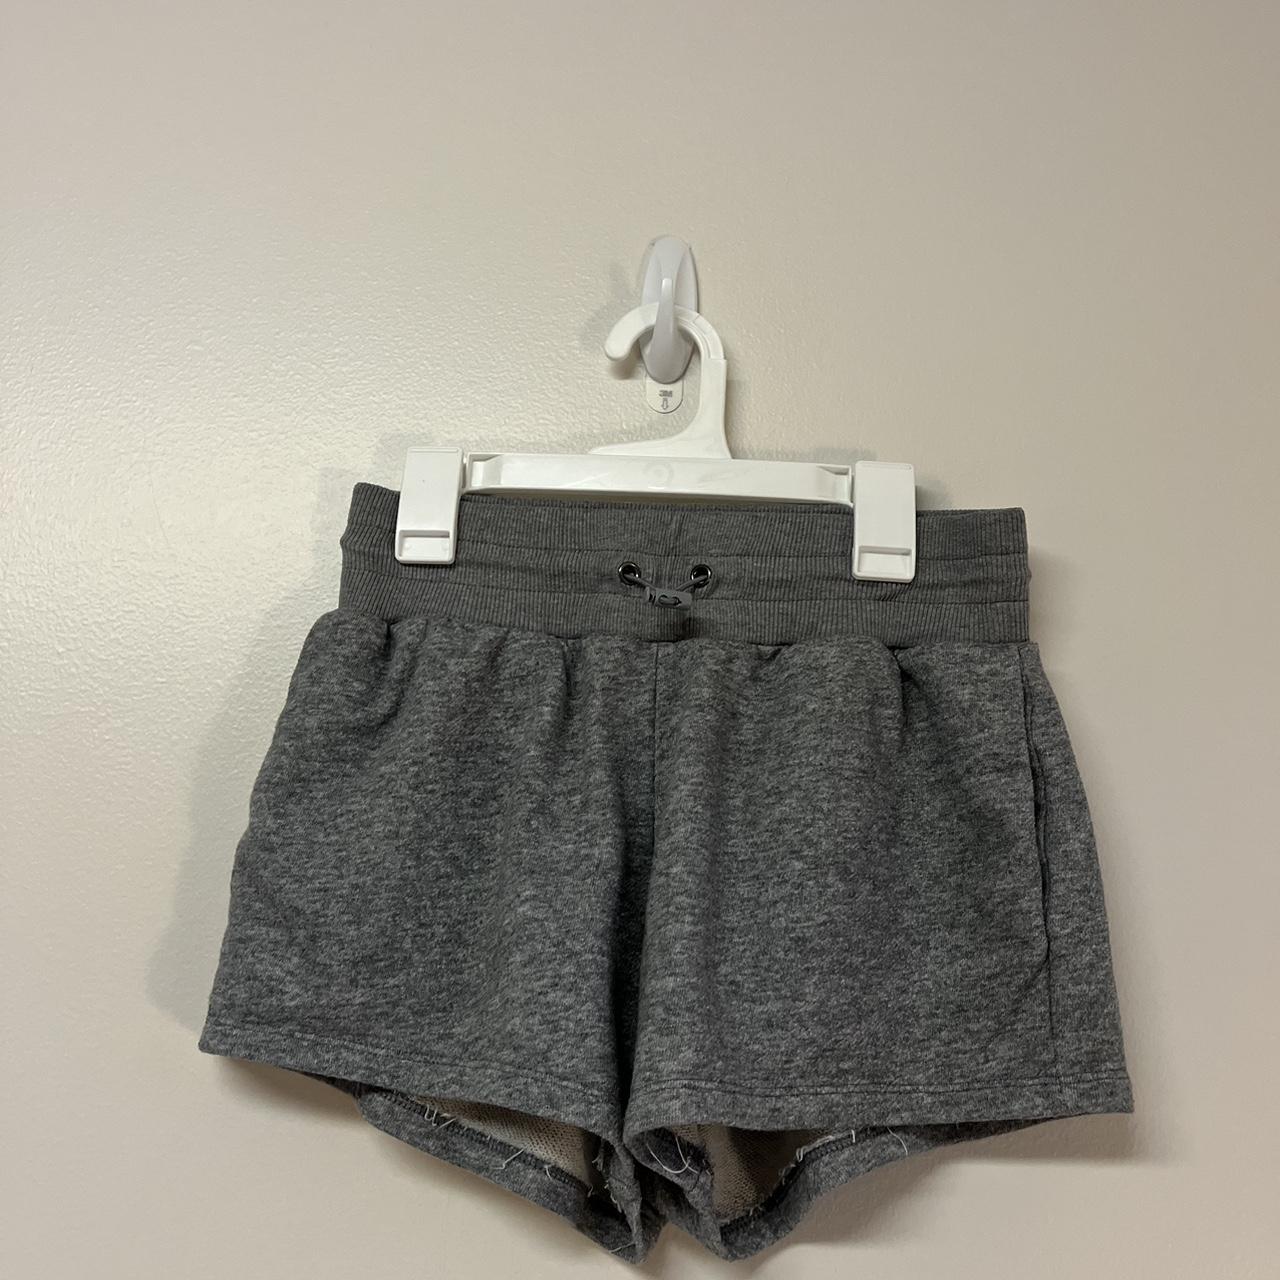 Women's Grey Lounge Shorts